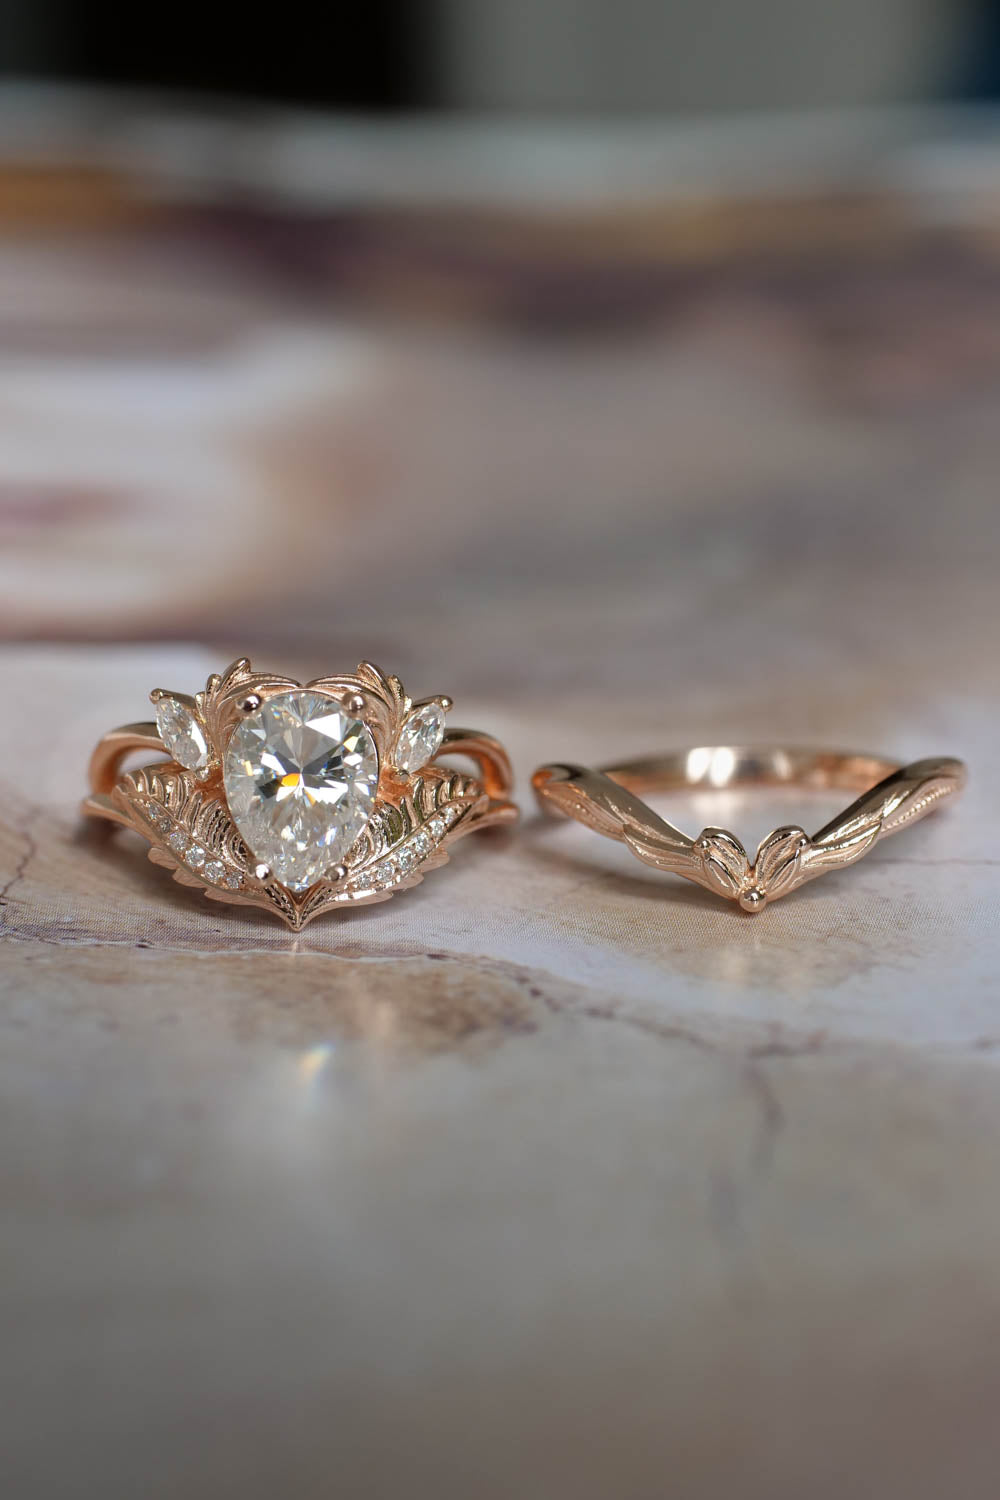 Moissanite engagement ring set in rose gold / Adonis - Eden Garden Jewelry™